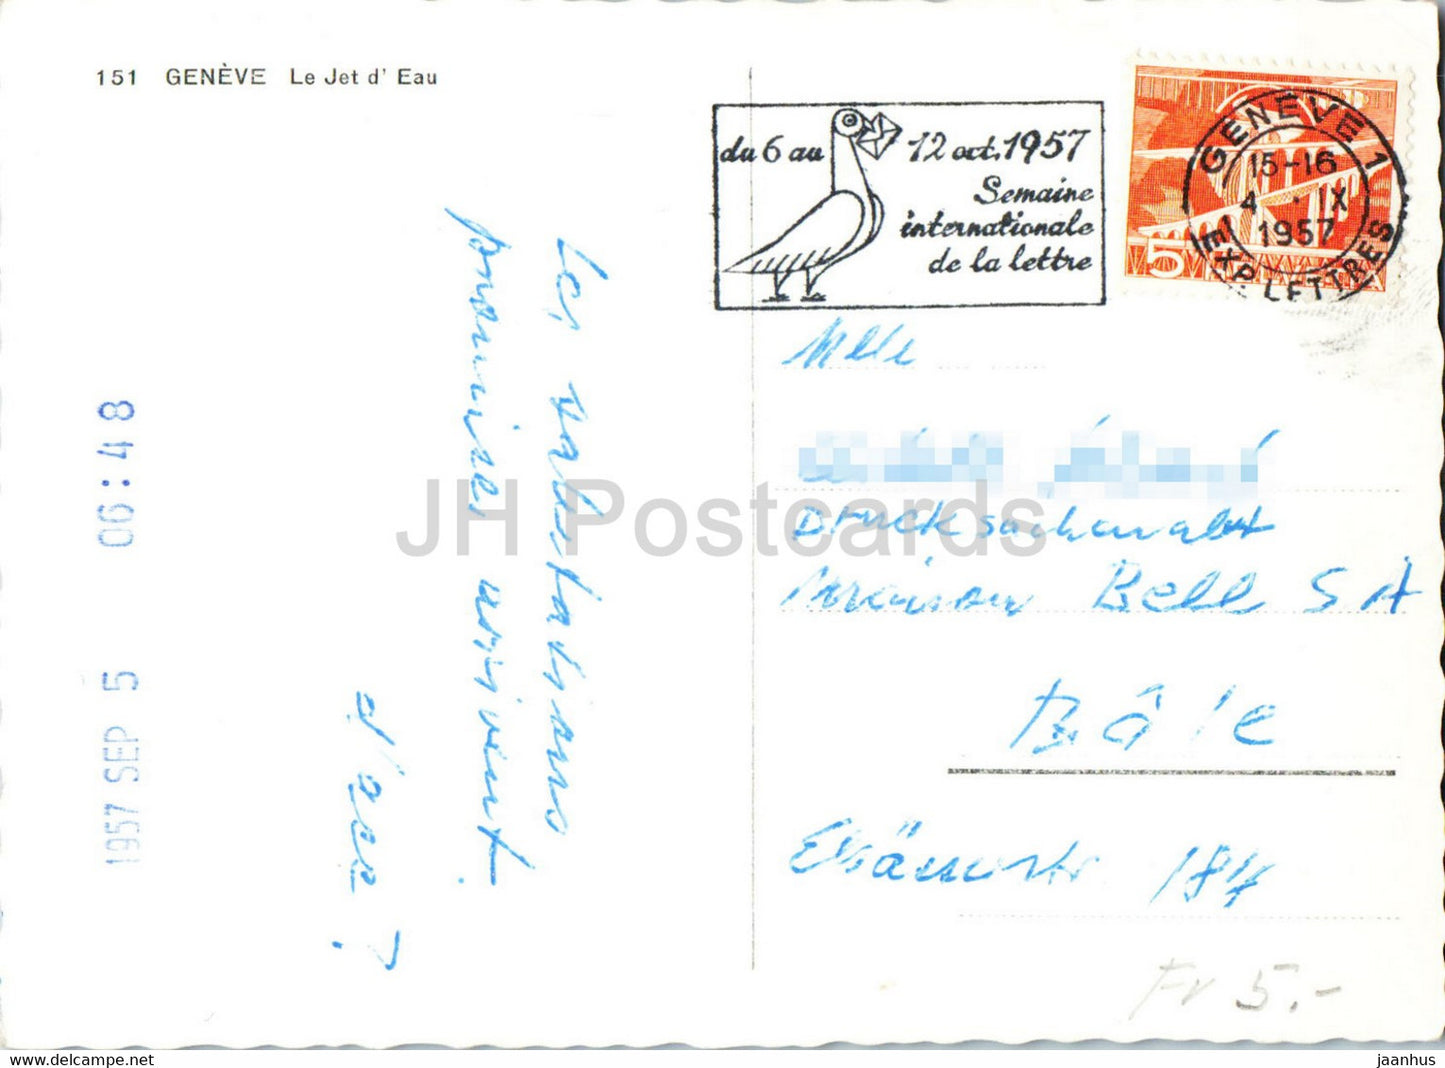 Geneve - Le Jet d' Eau - ship - 151 - old postcard - 1957 - Switzerland - used